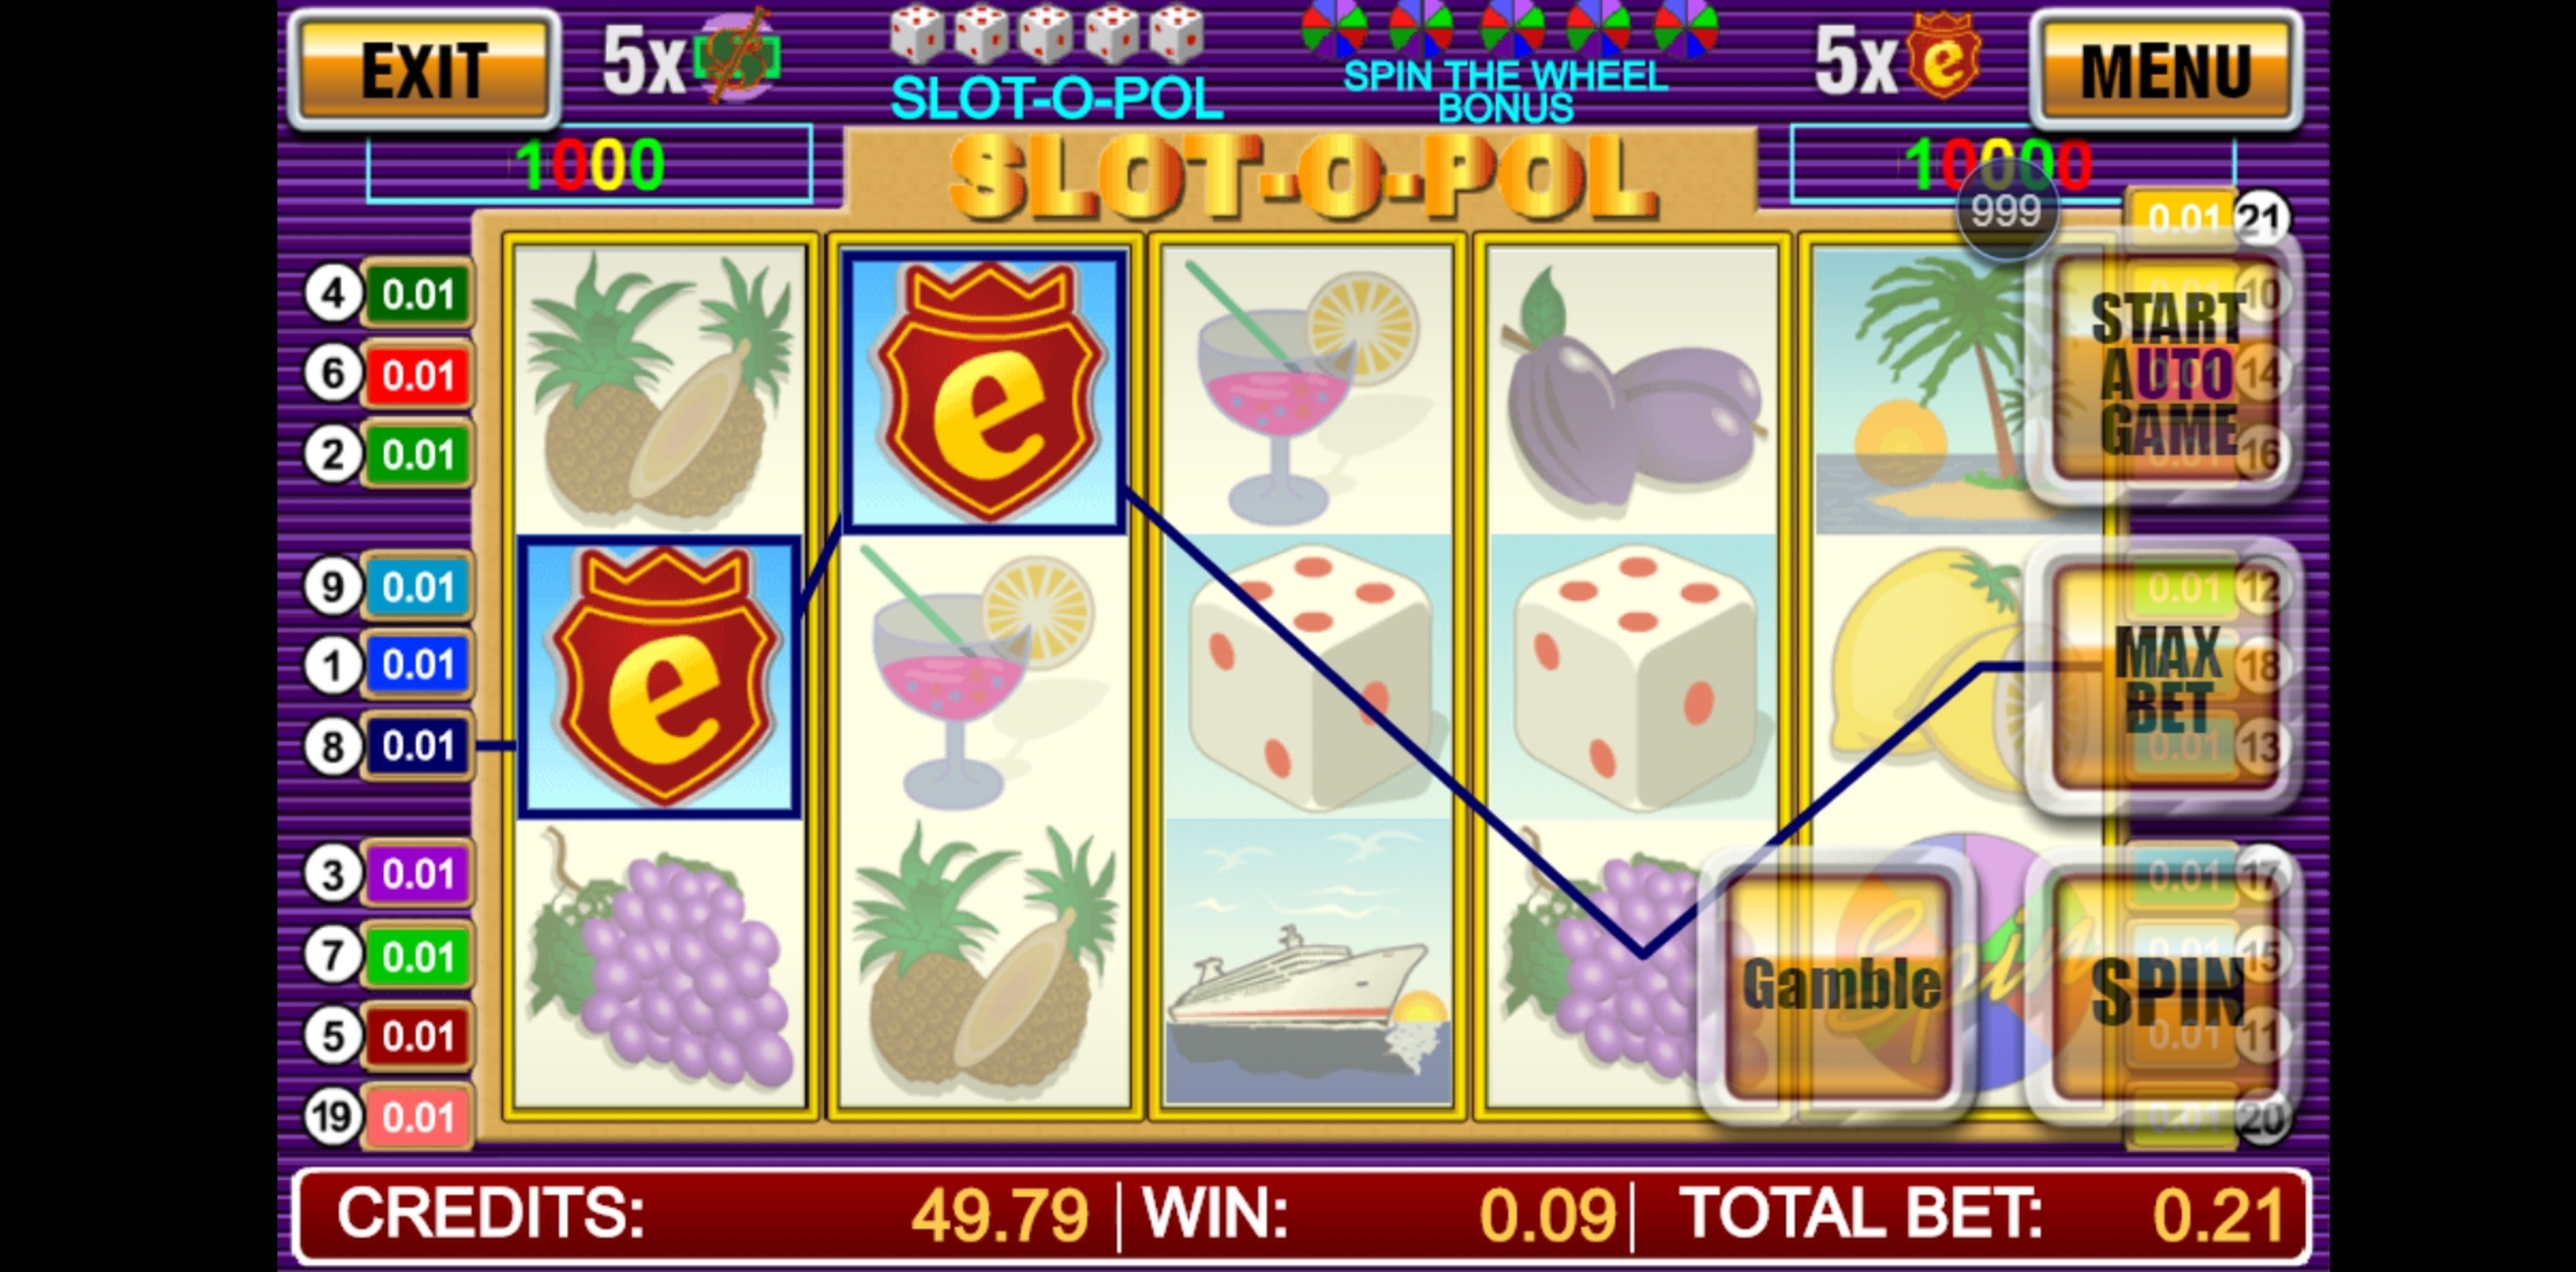 Win Money in Slot-o-pol Free Slot Game by Novomatic